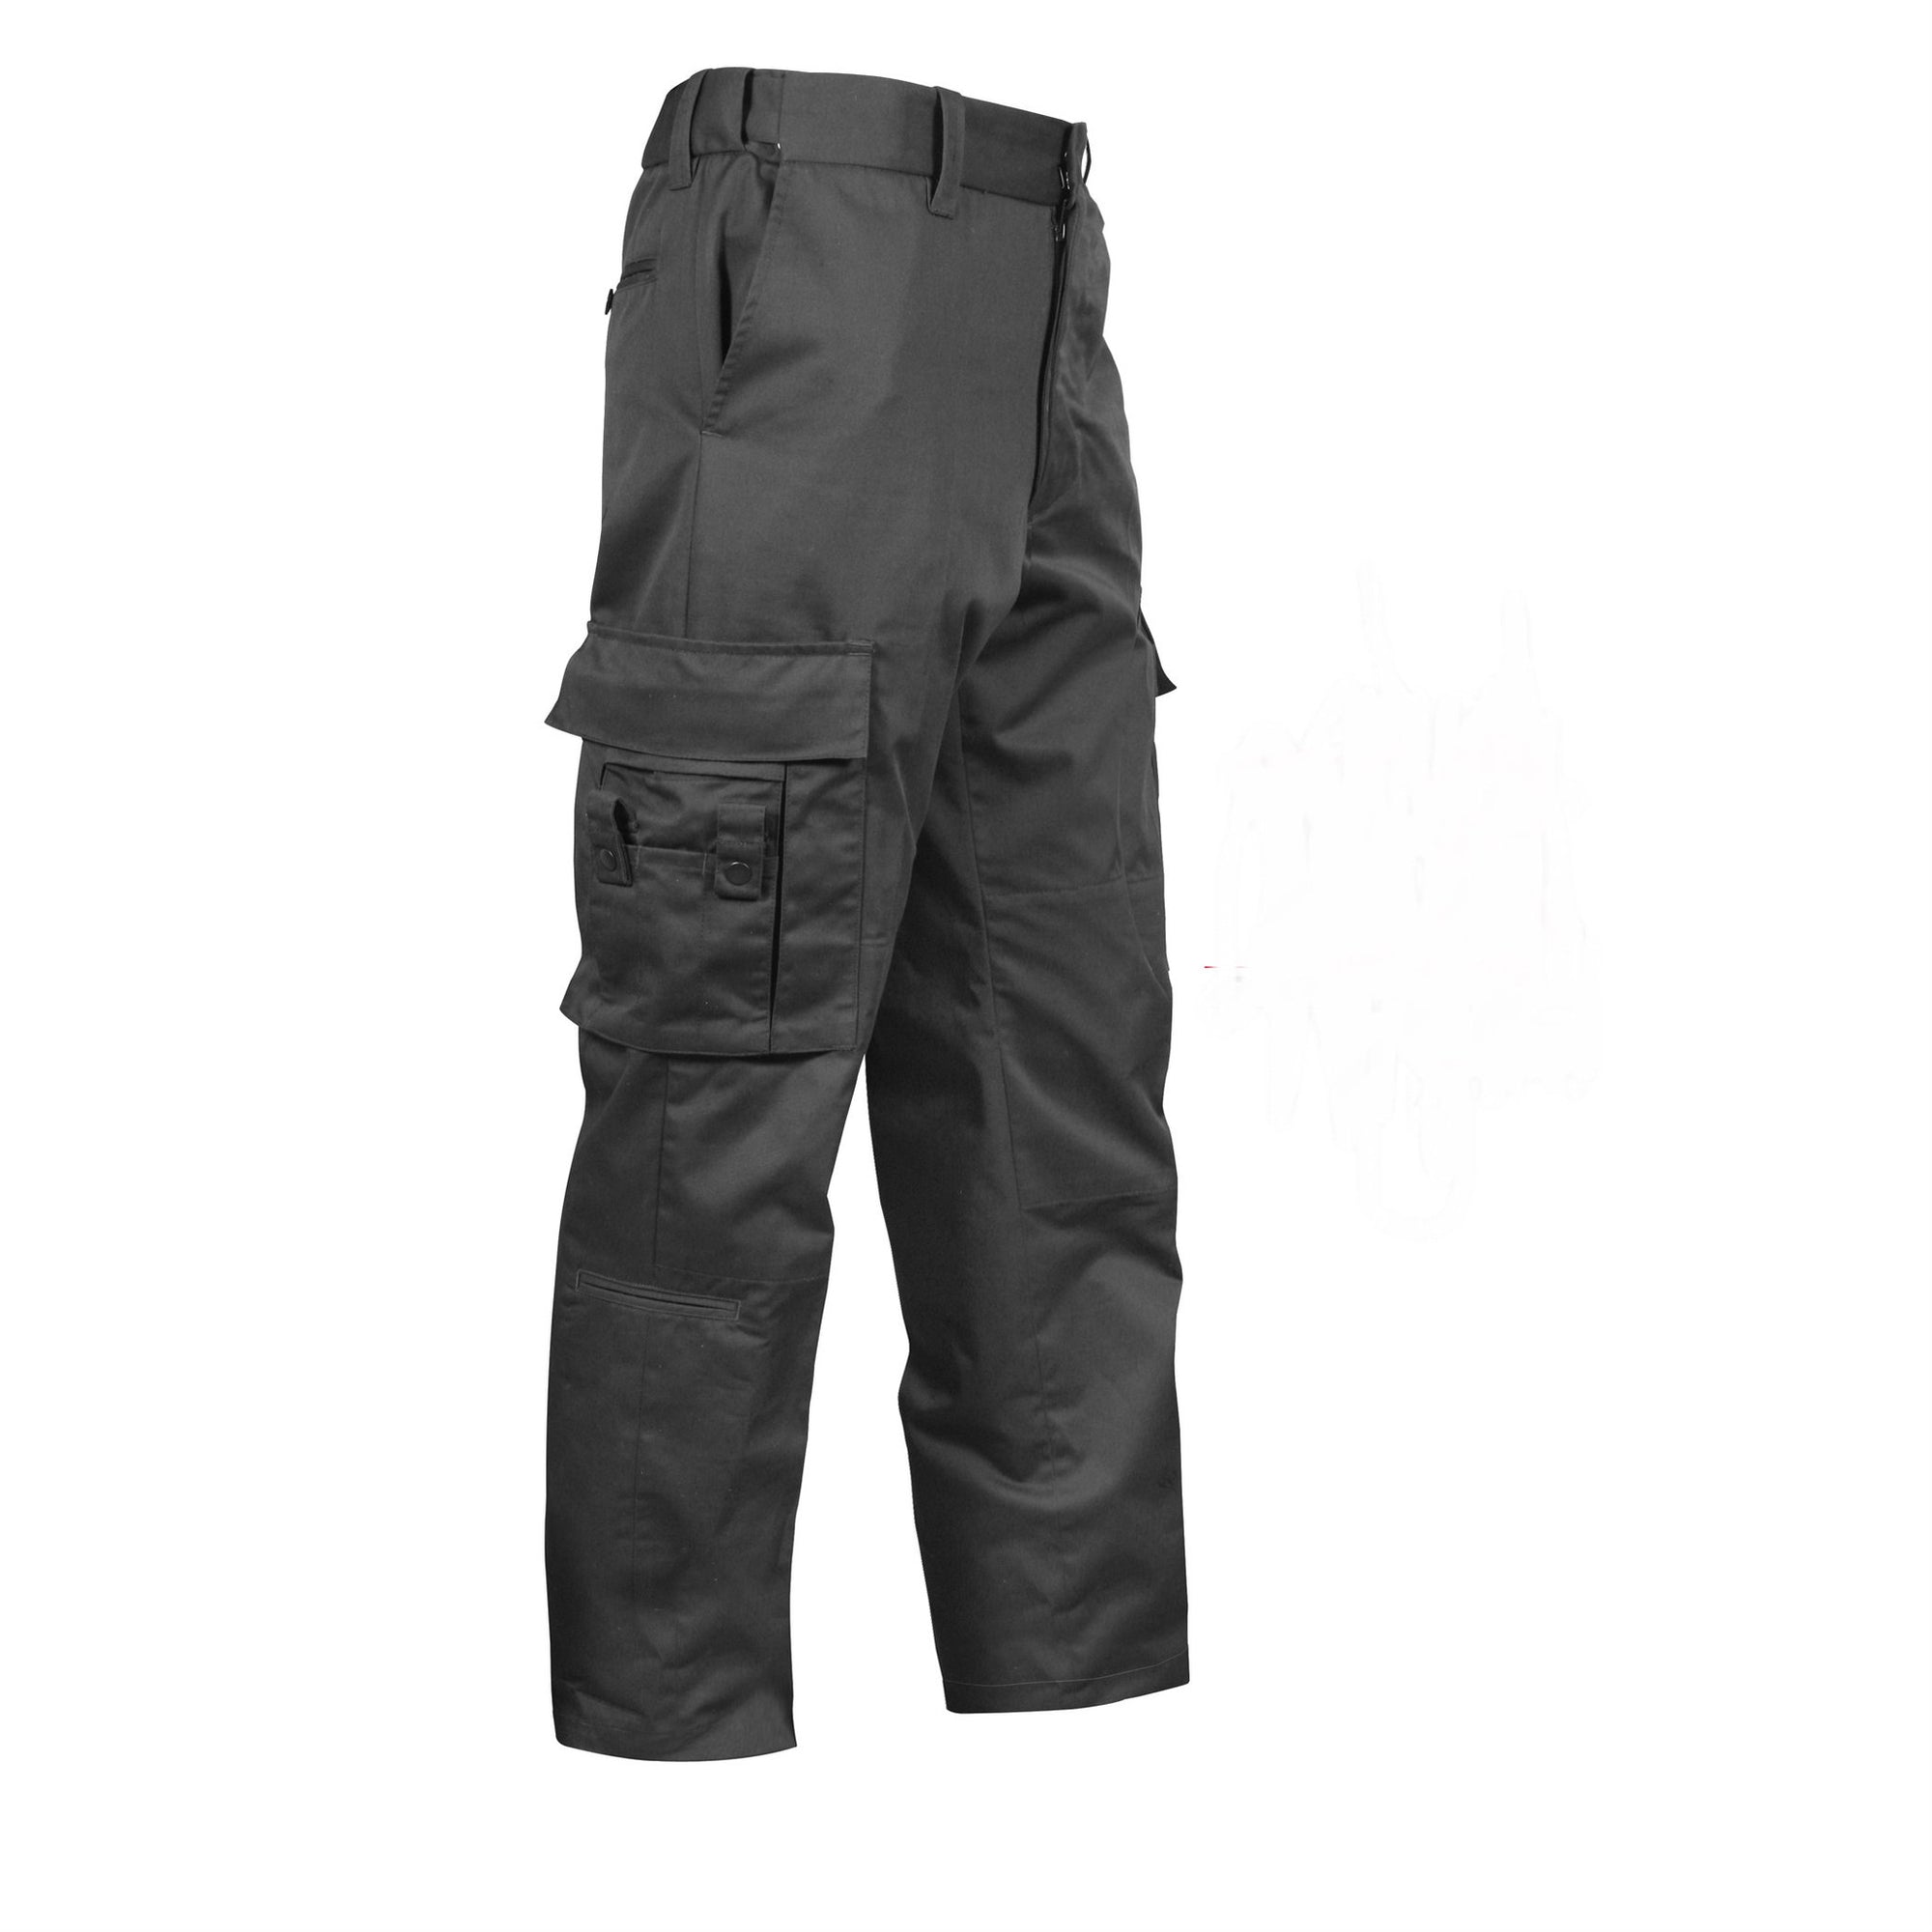 Black EMT Pants - Army Navy Gear